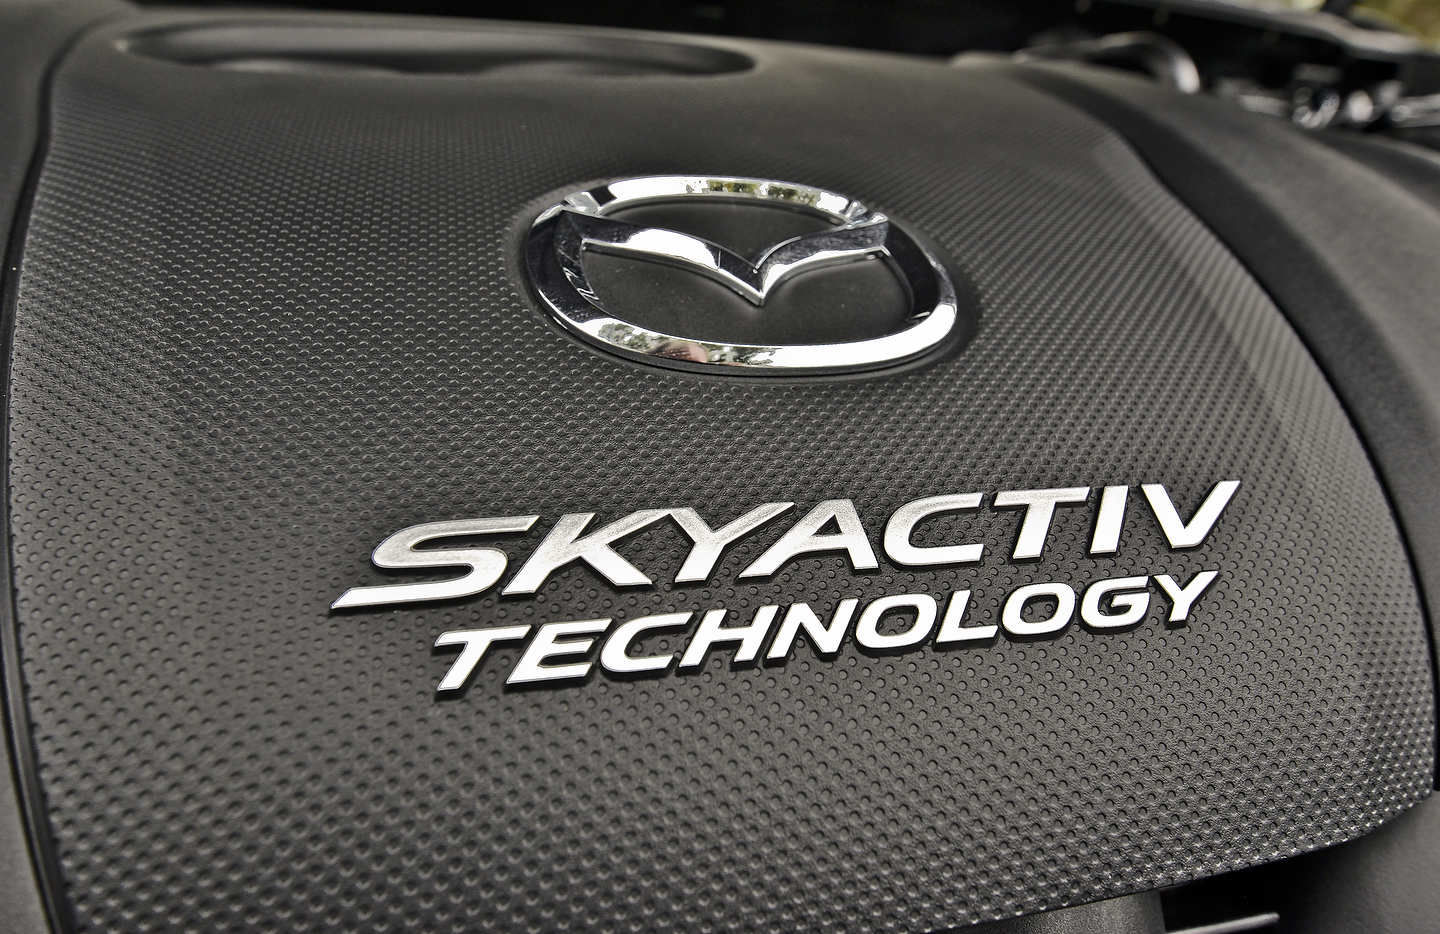 How does SKYACTIV technology improve fuel economy?